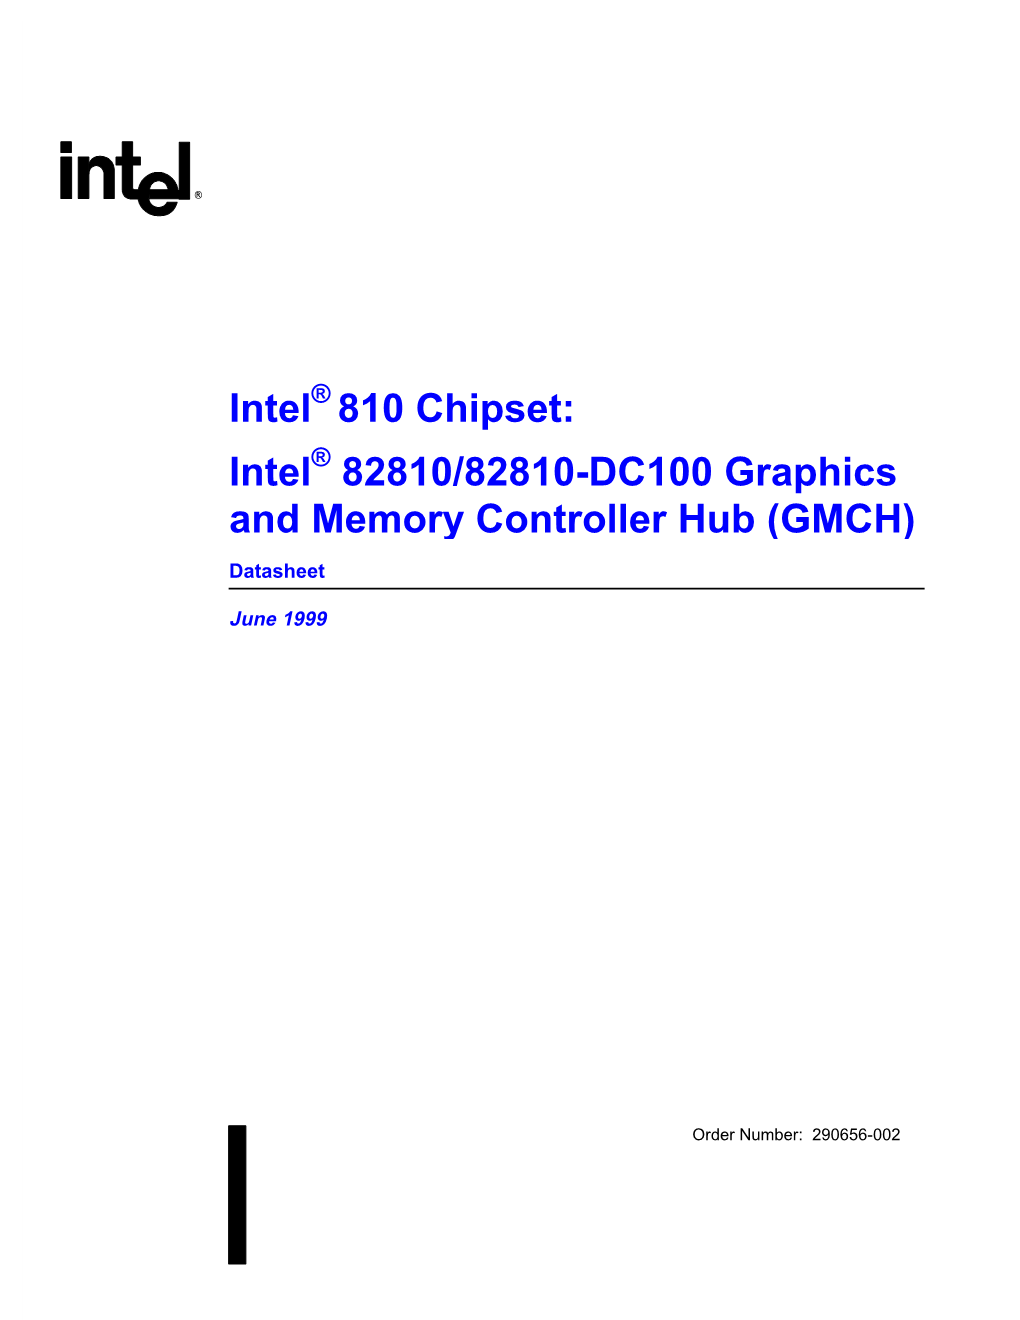 Intel 810 Chipset